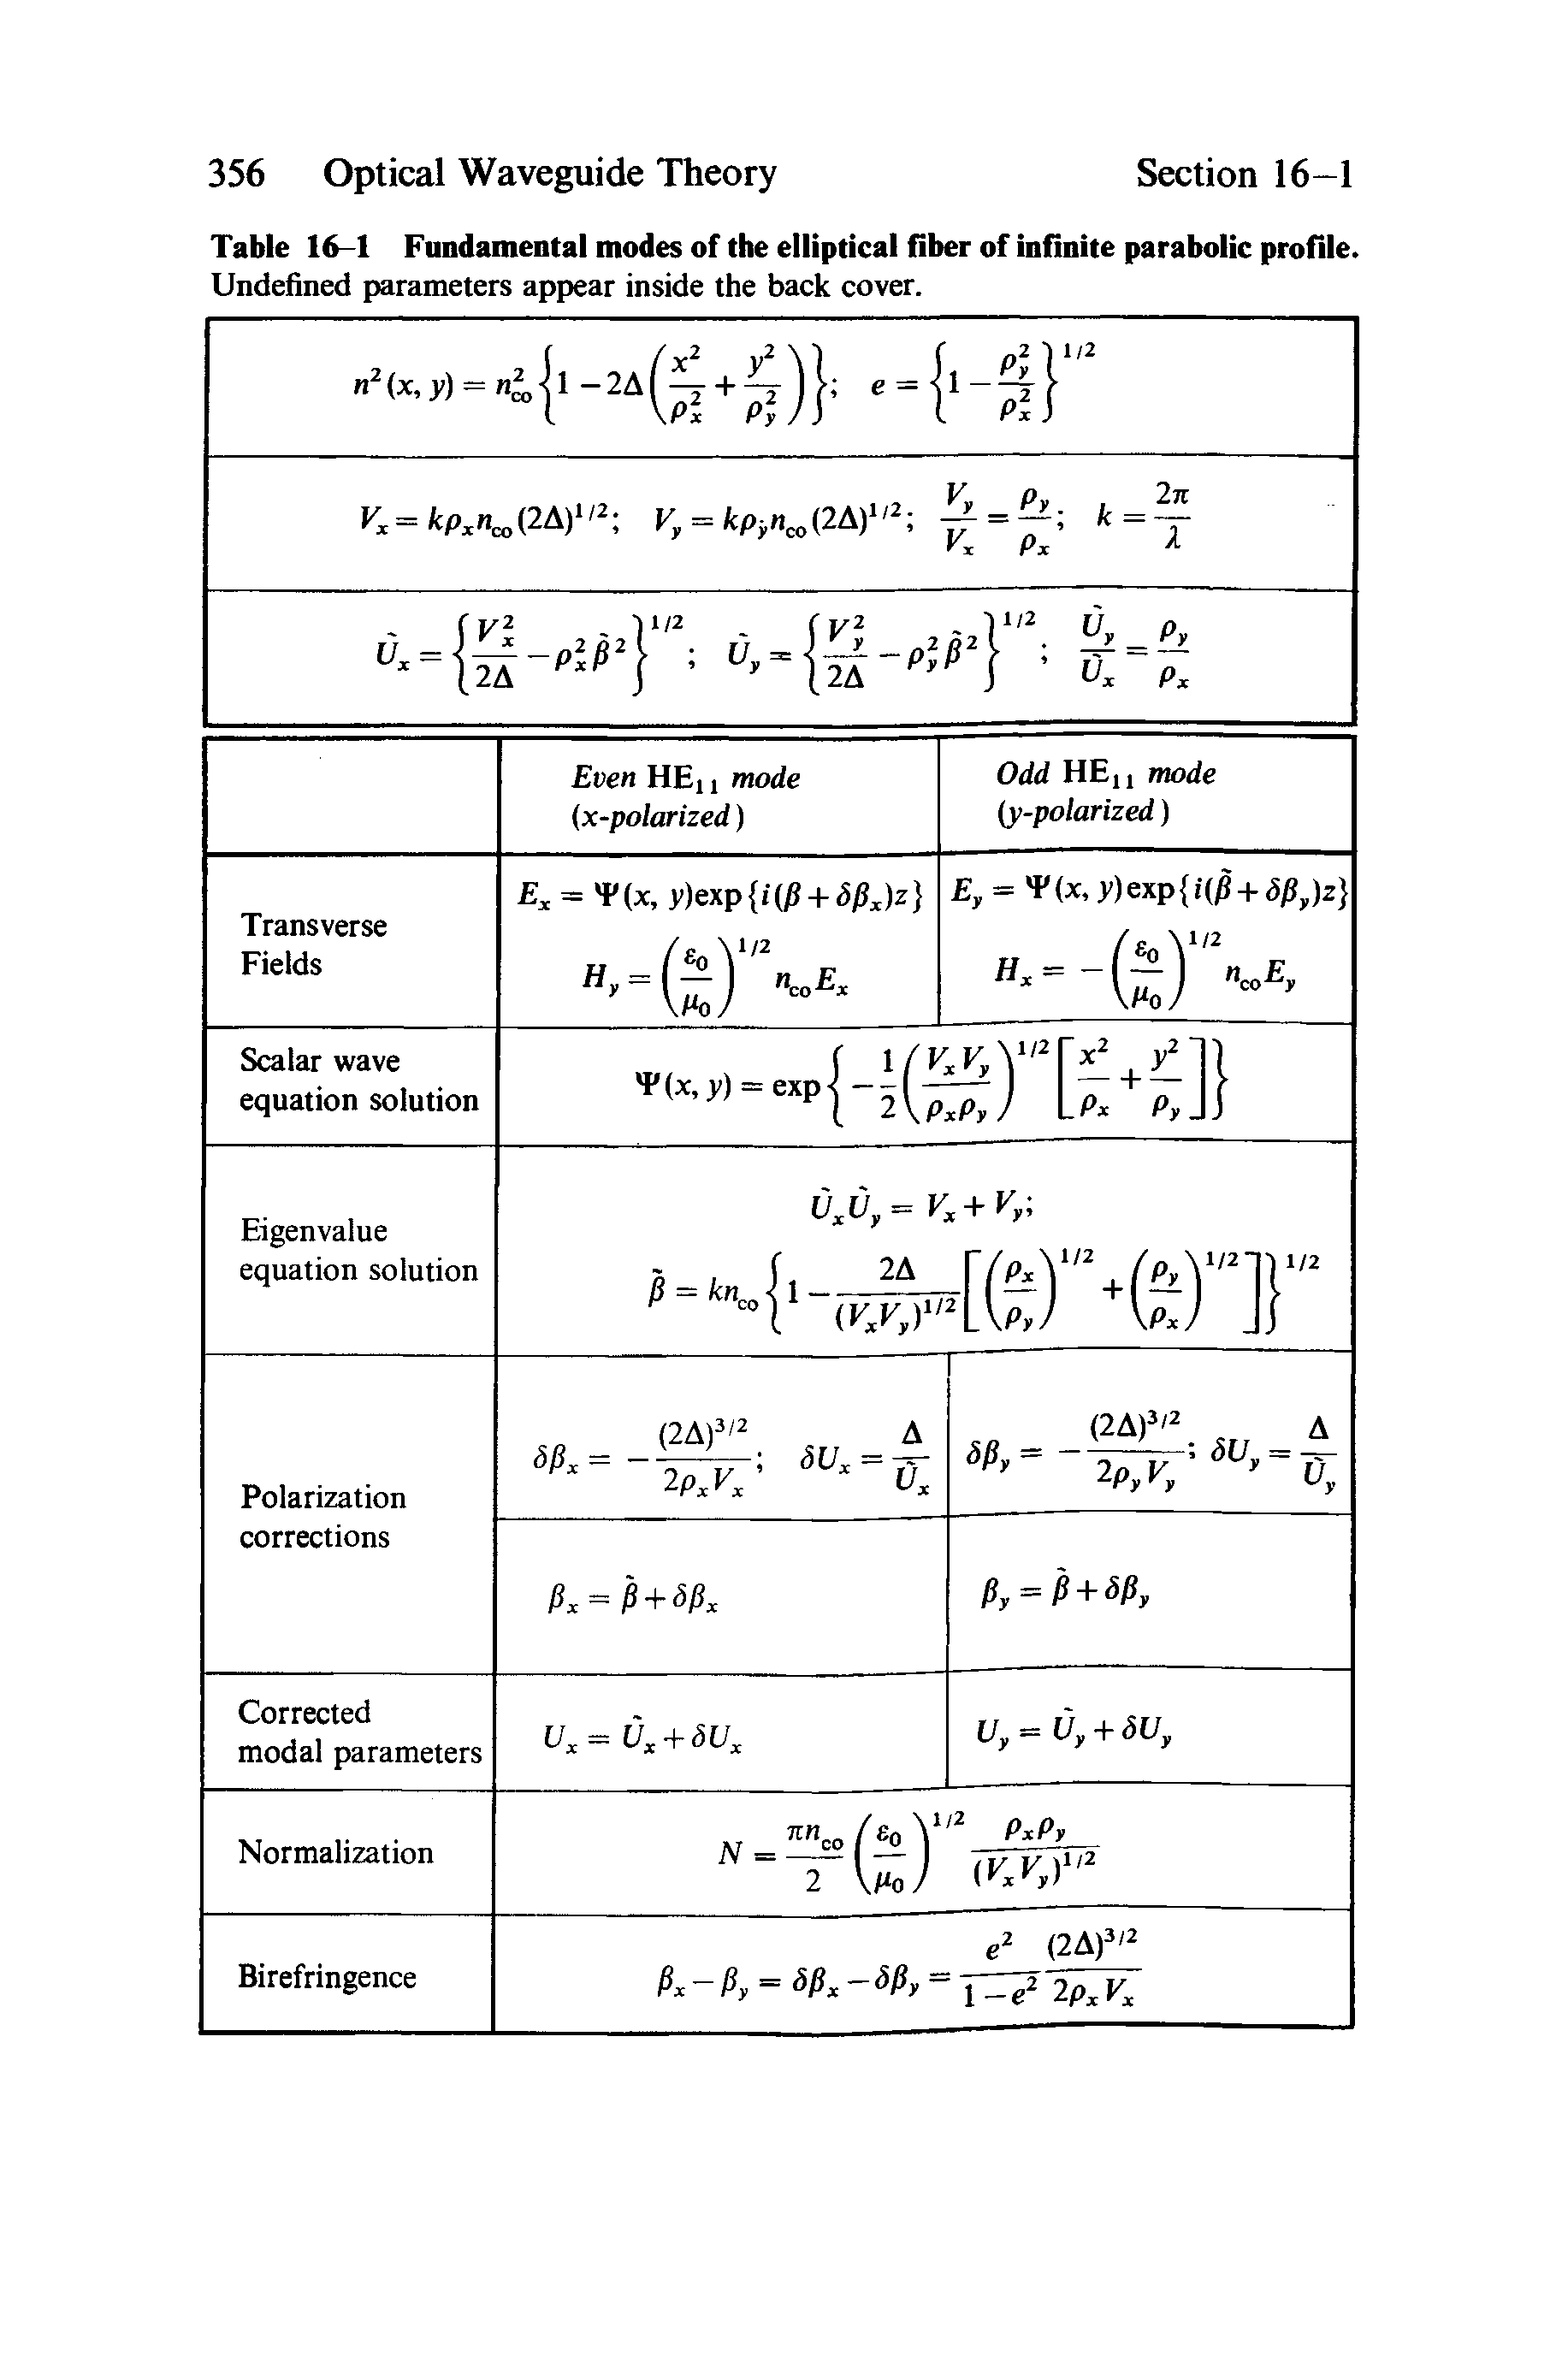 Table 16-1 Fundamental modes of the elliptical fiber of infinite parabolic profile.